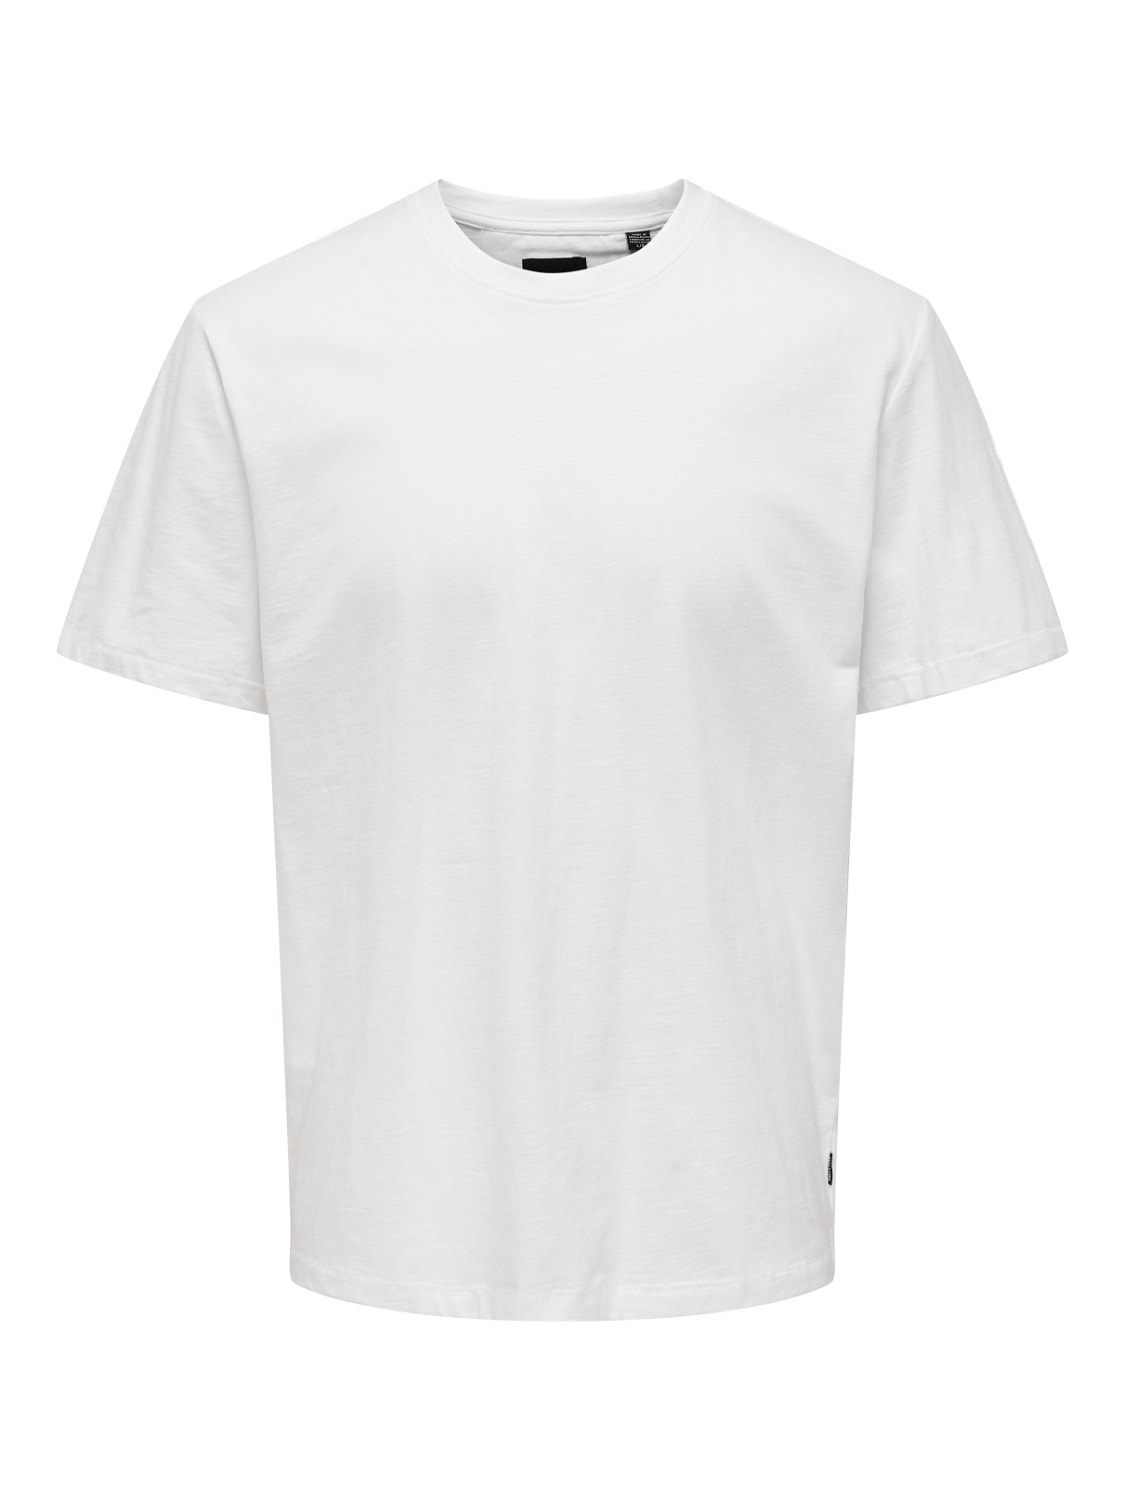 ONLY & SONS Camisetas Corte regular Cuello redondo -White - 22020074